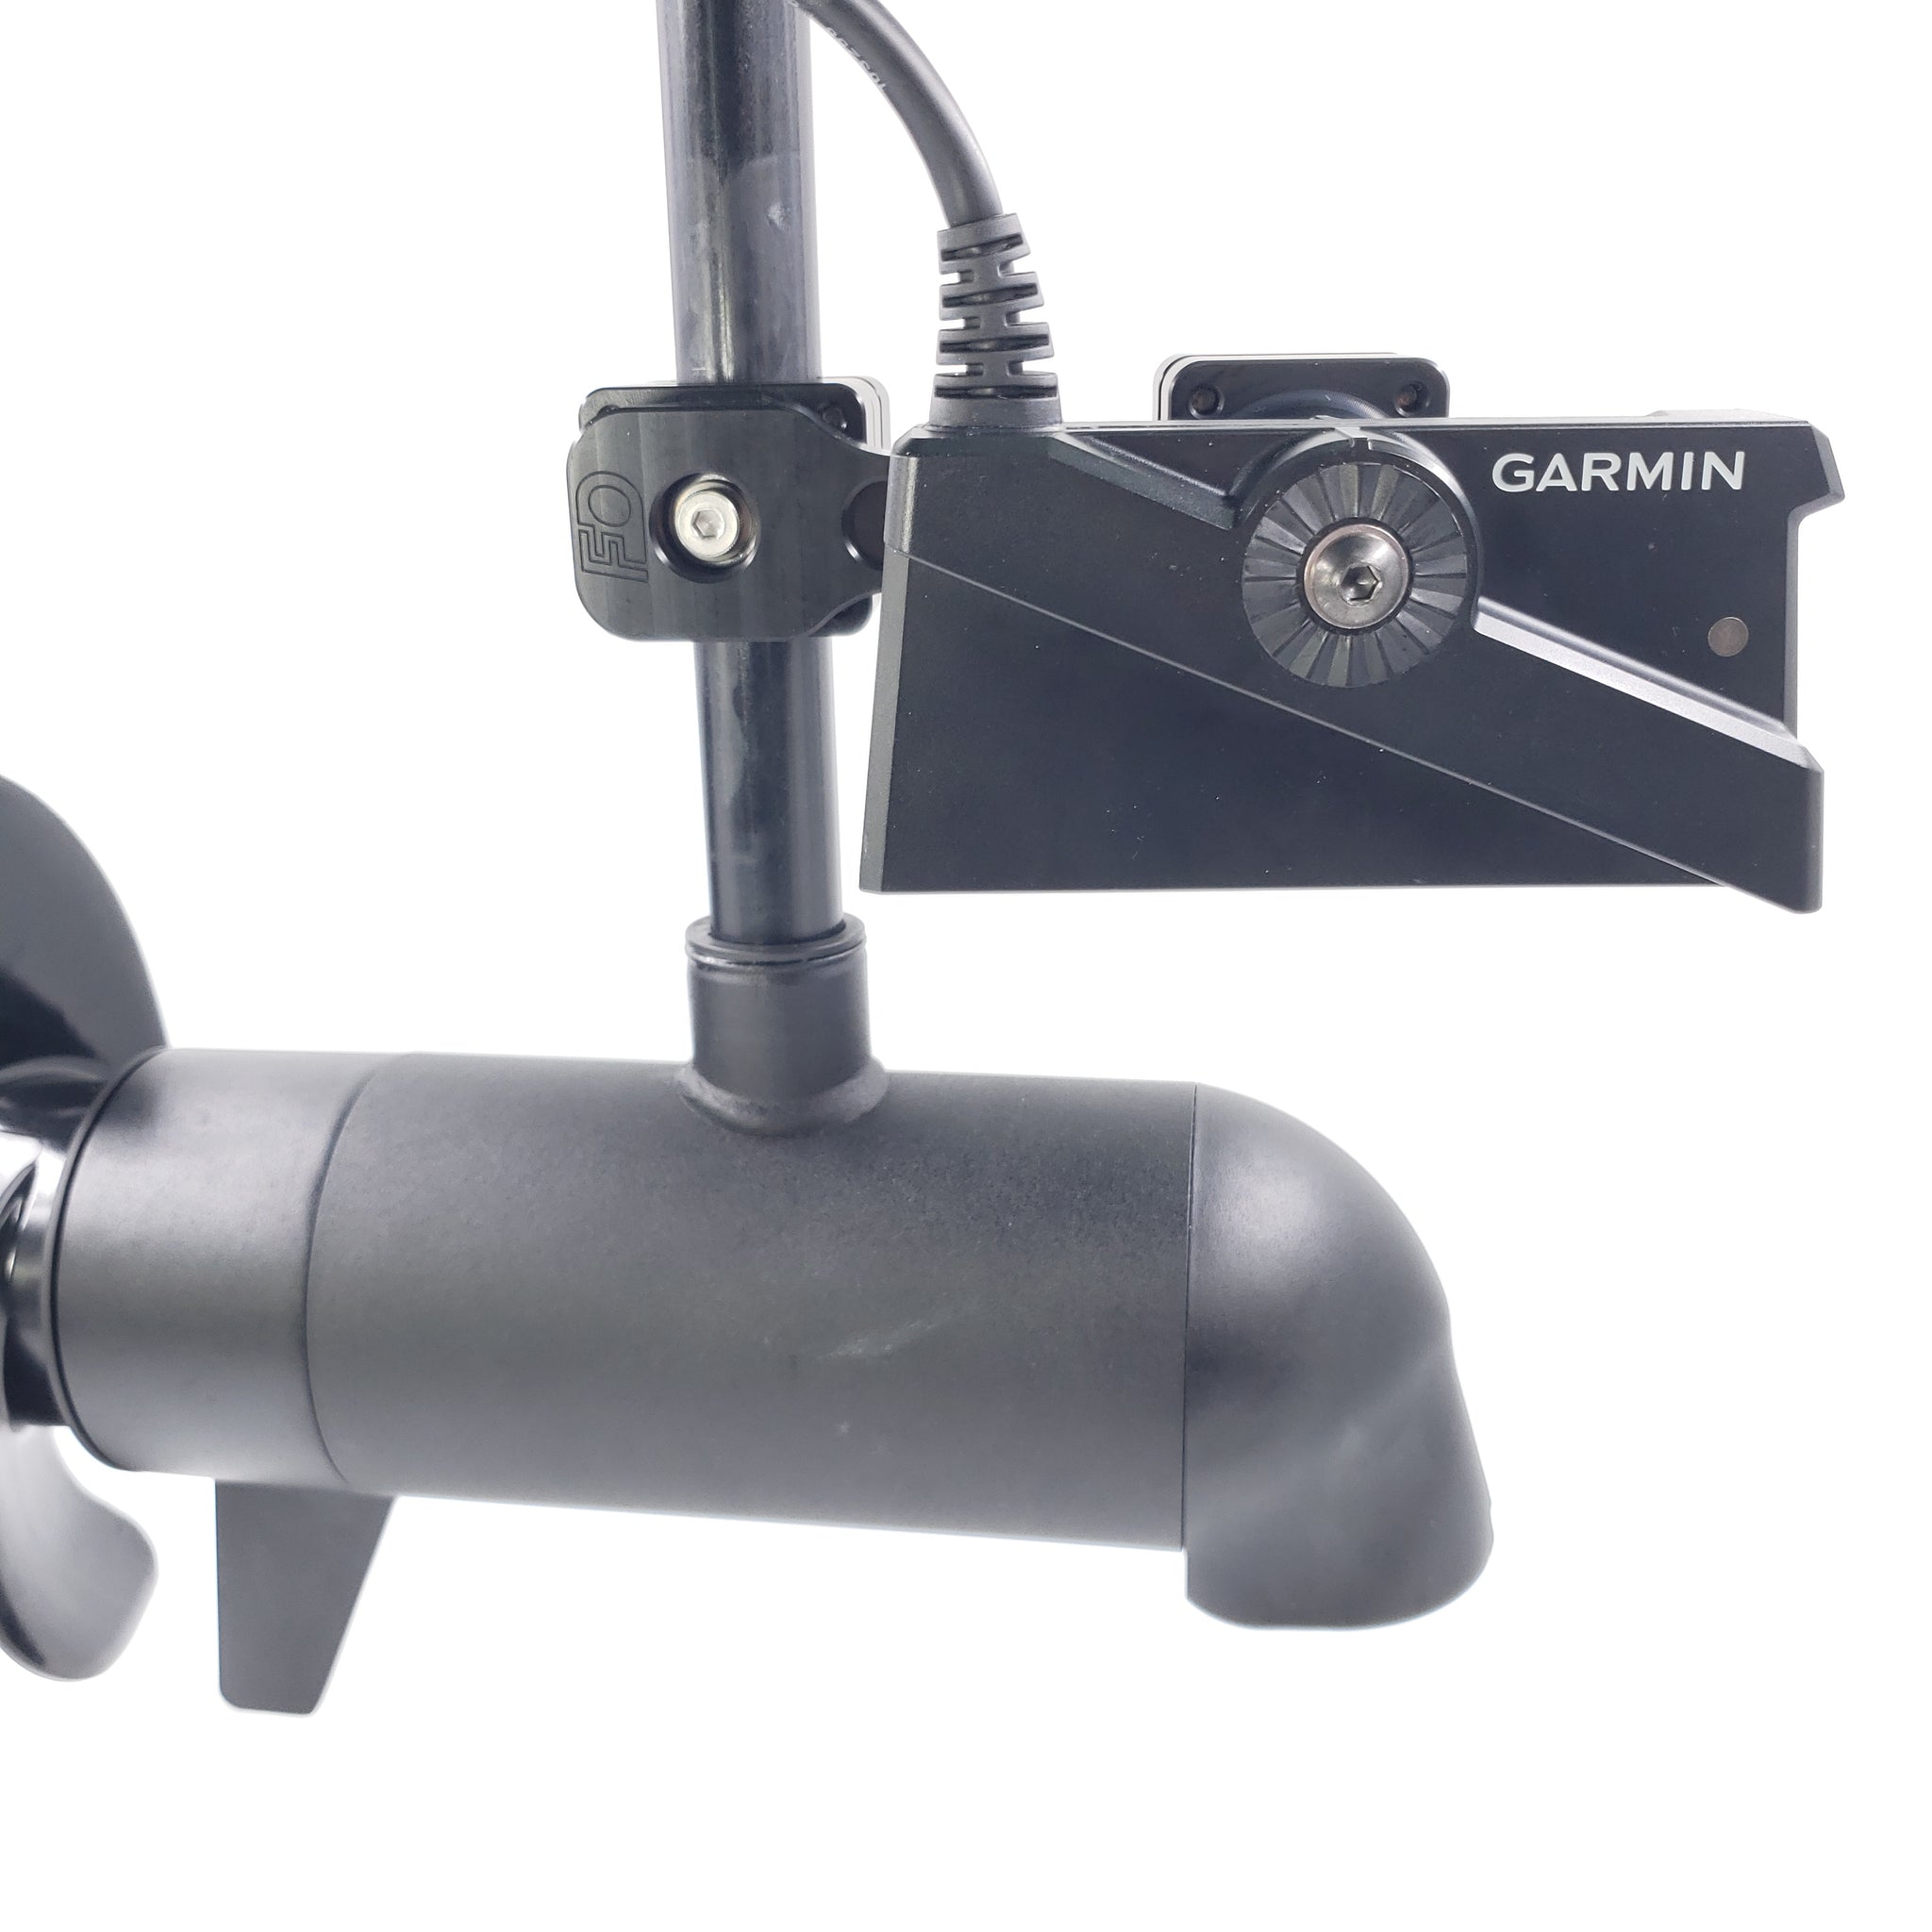 Garmin Panoptix livescope with LVS34